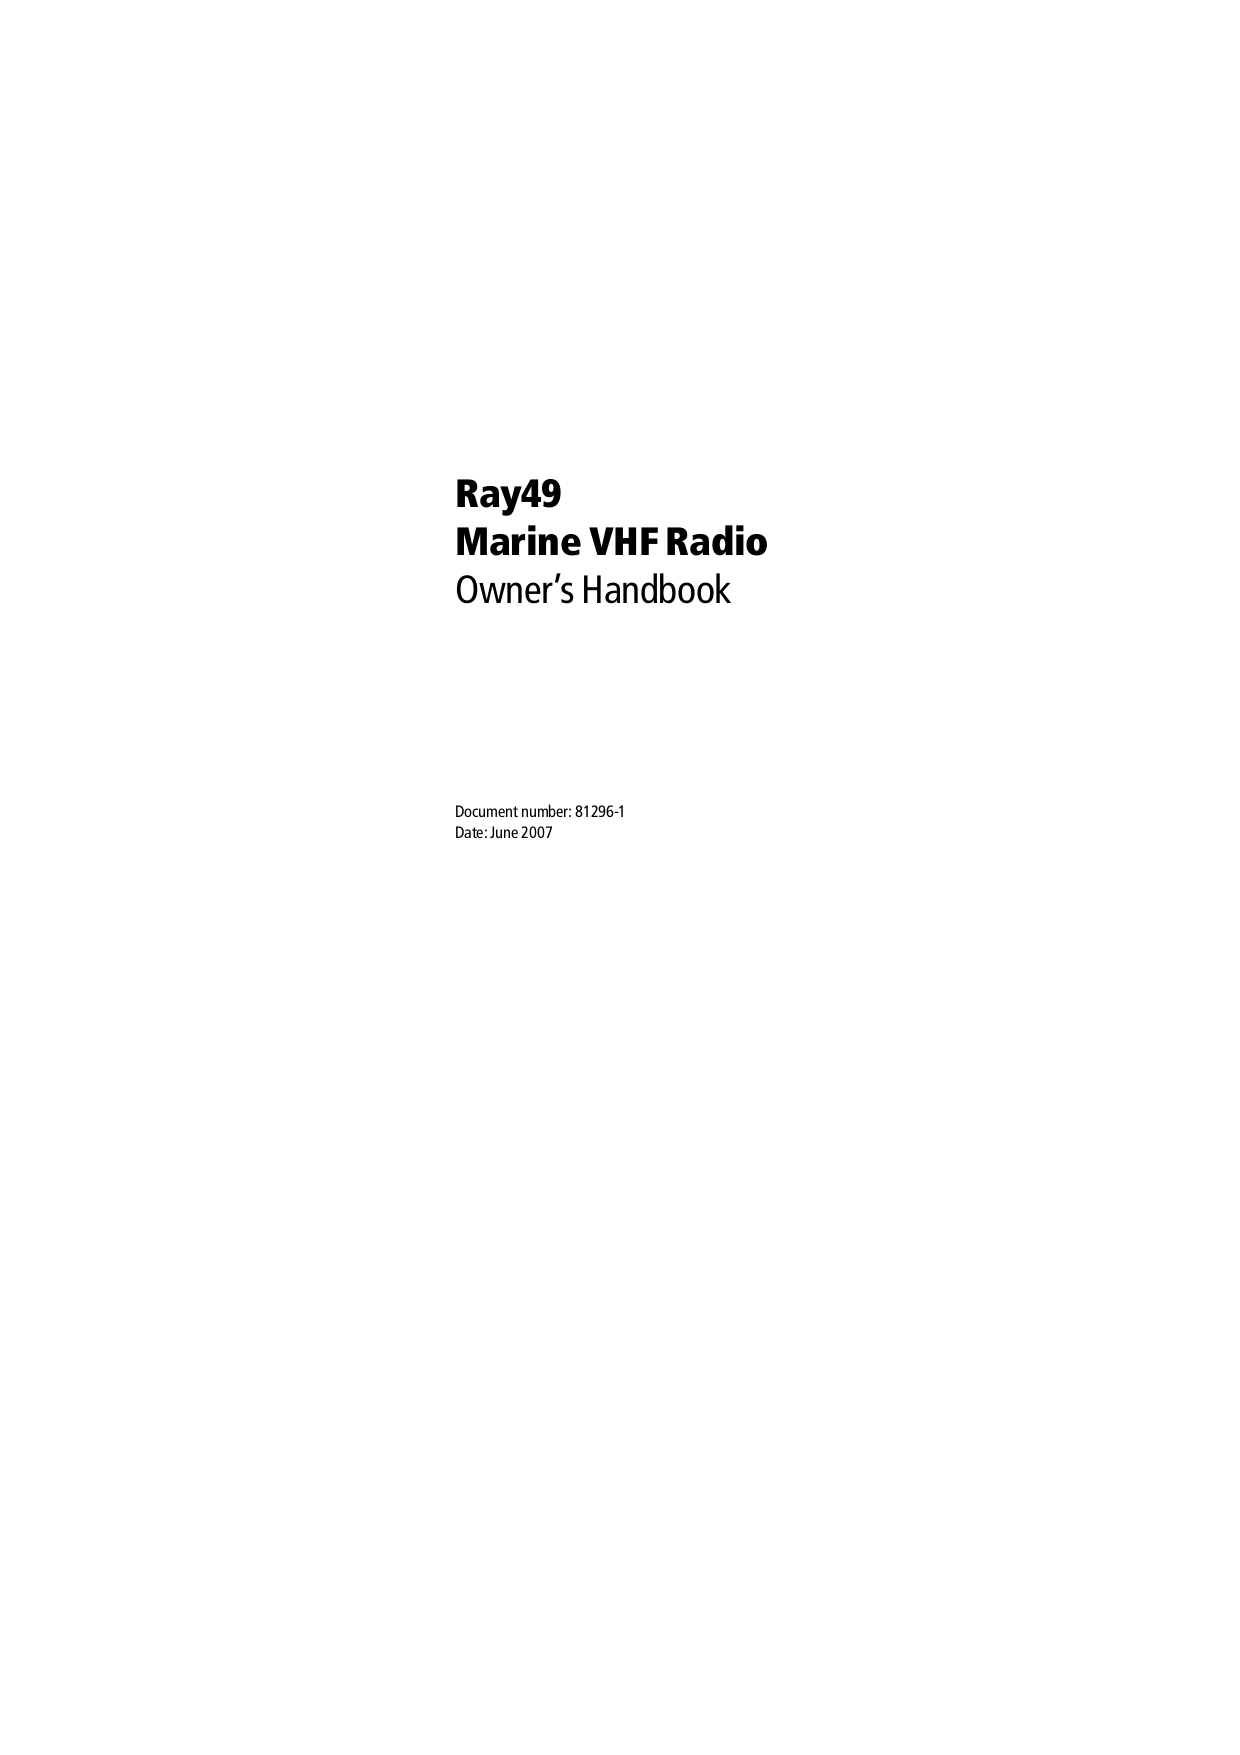 Download free pdf for Raymarine Ray 53 Radio manual